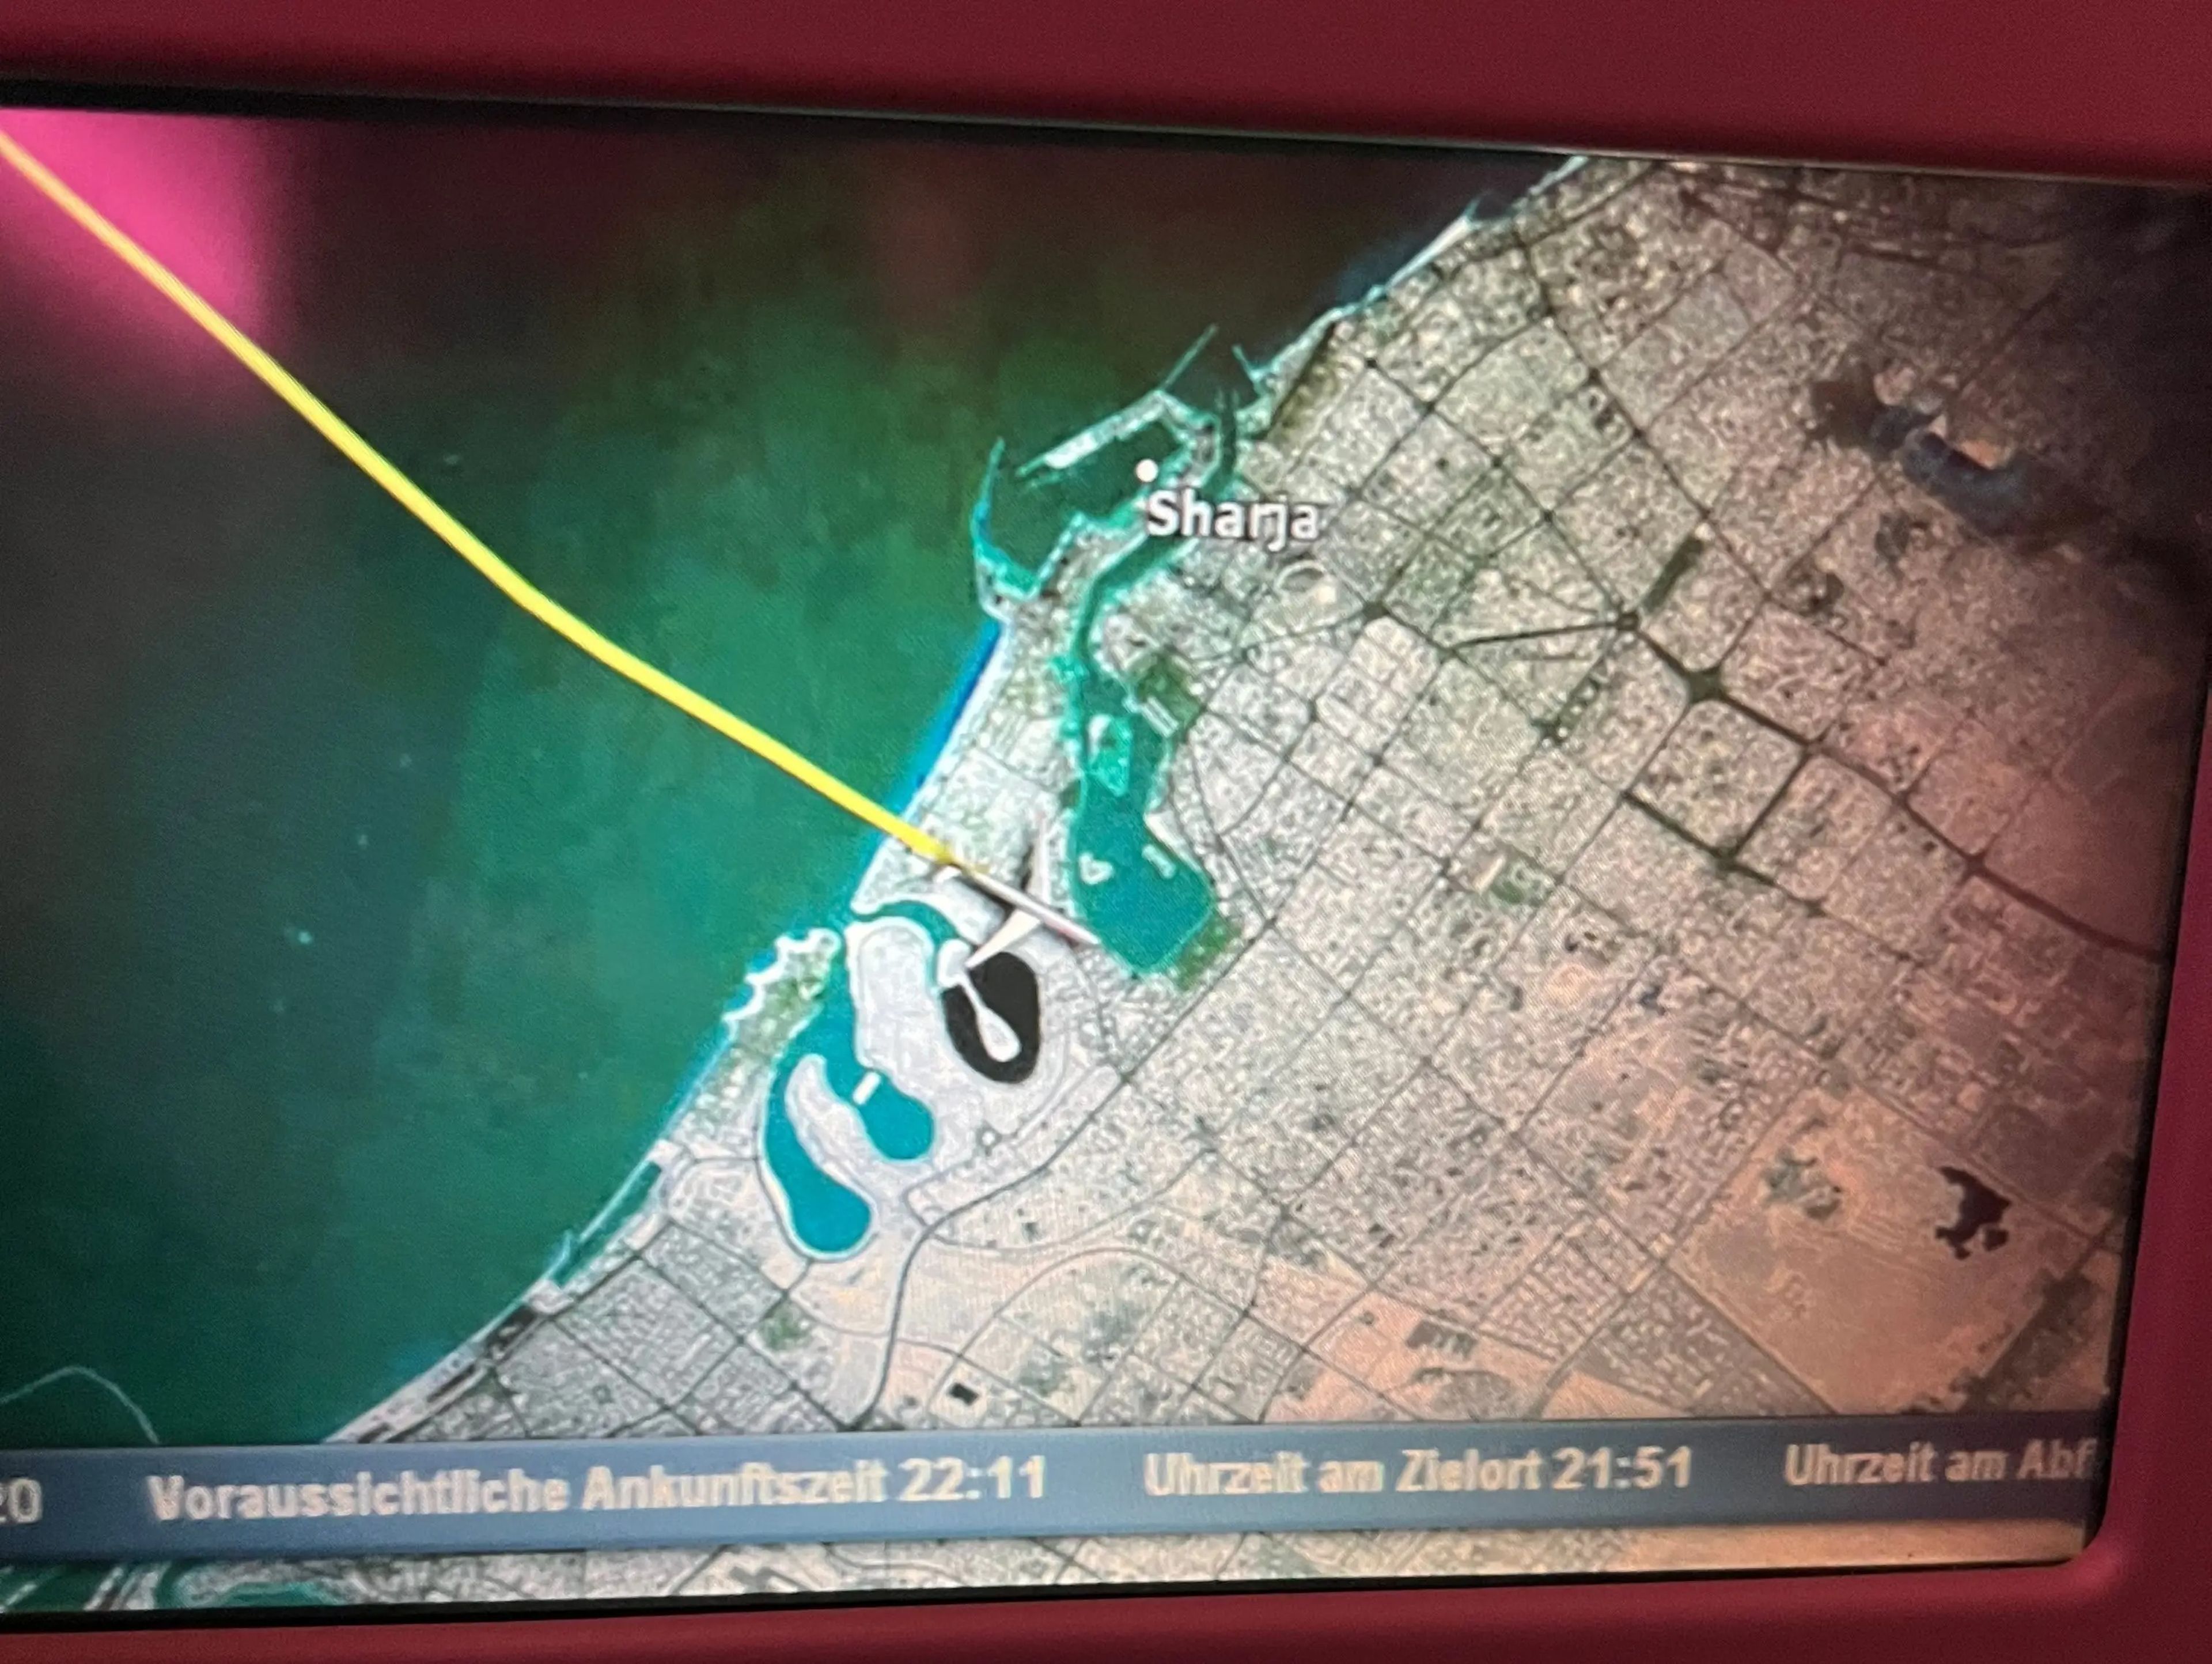 The map showing us landing in Dubai